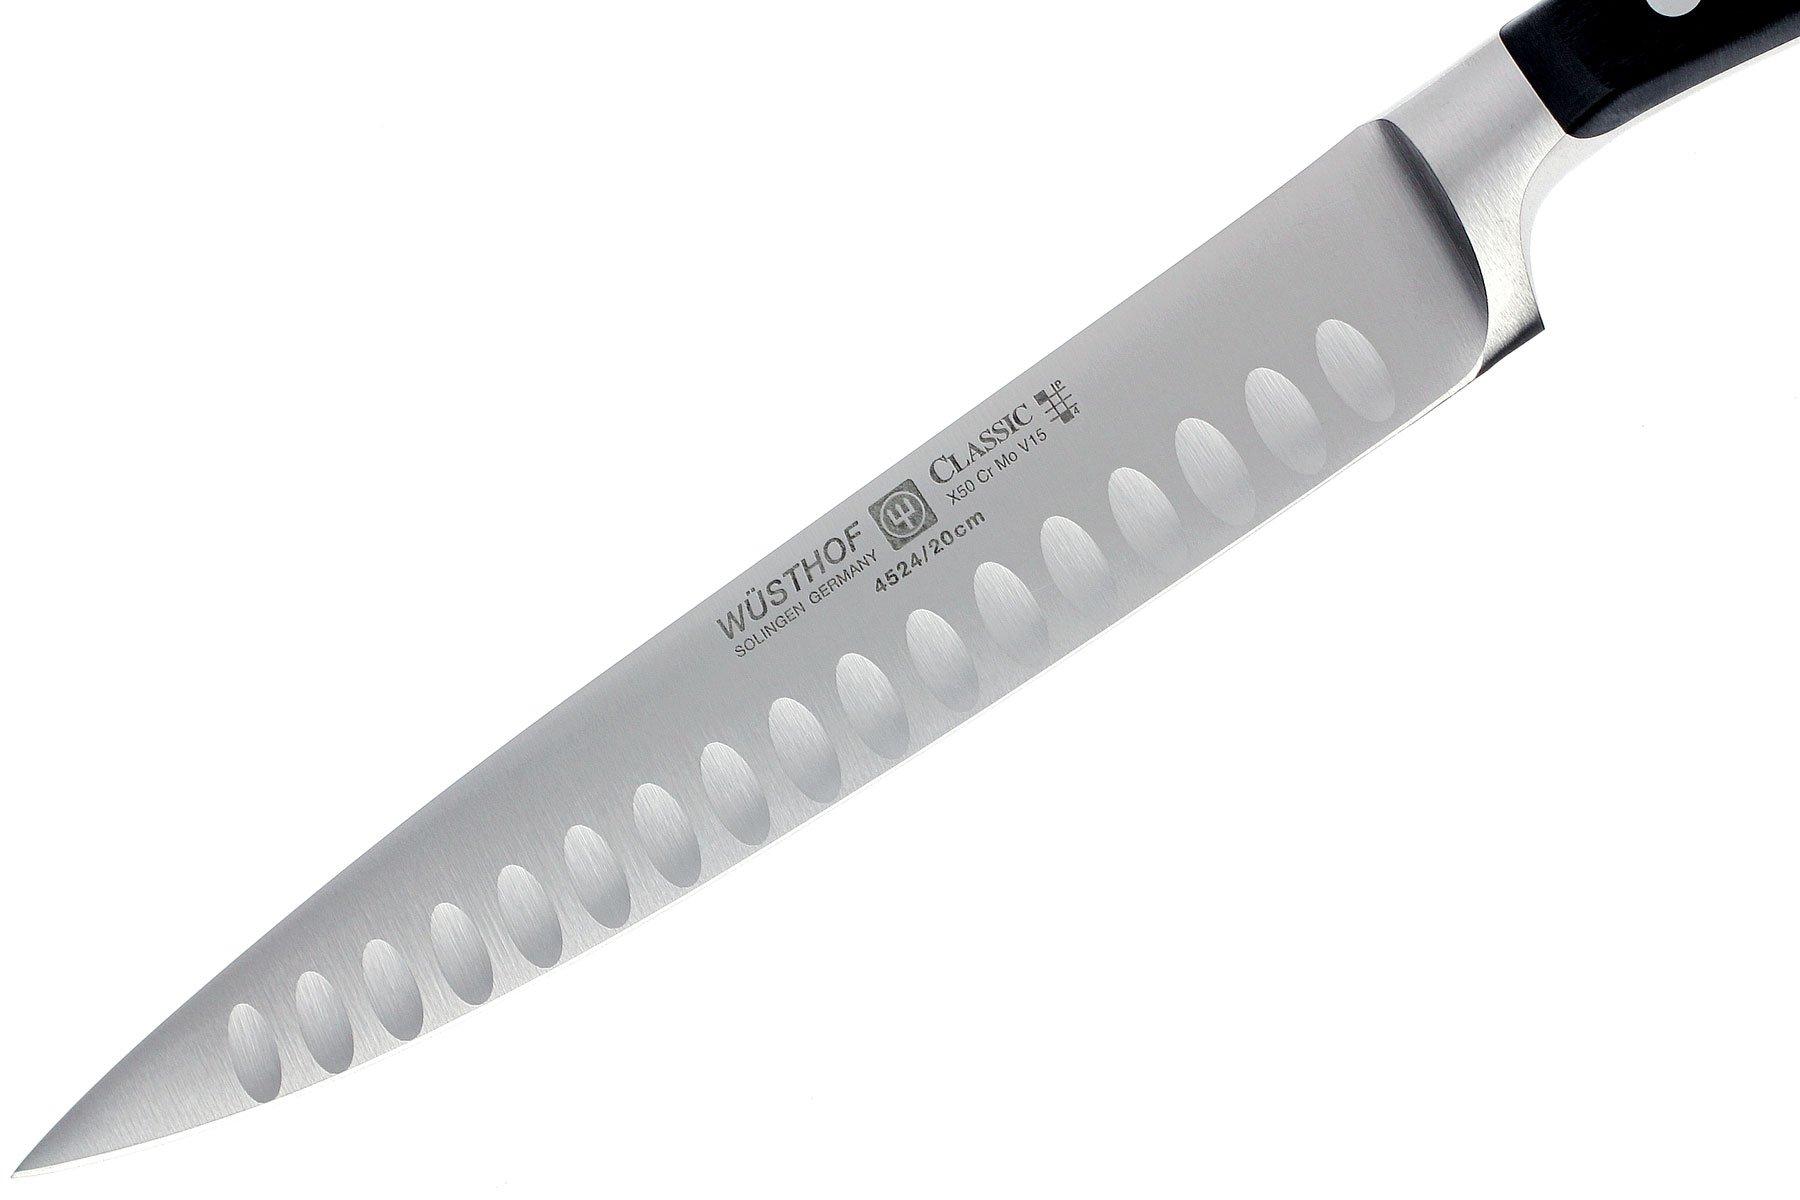 Wüsthof Classic Granton Carving Knife 20 cm, 4524/20